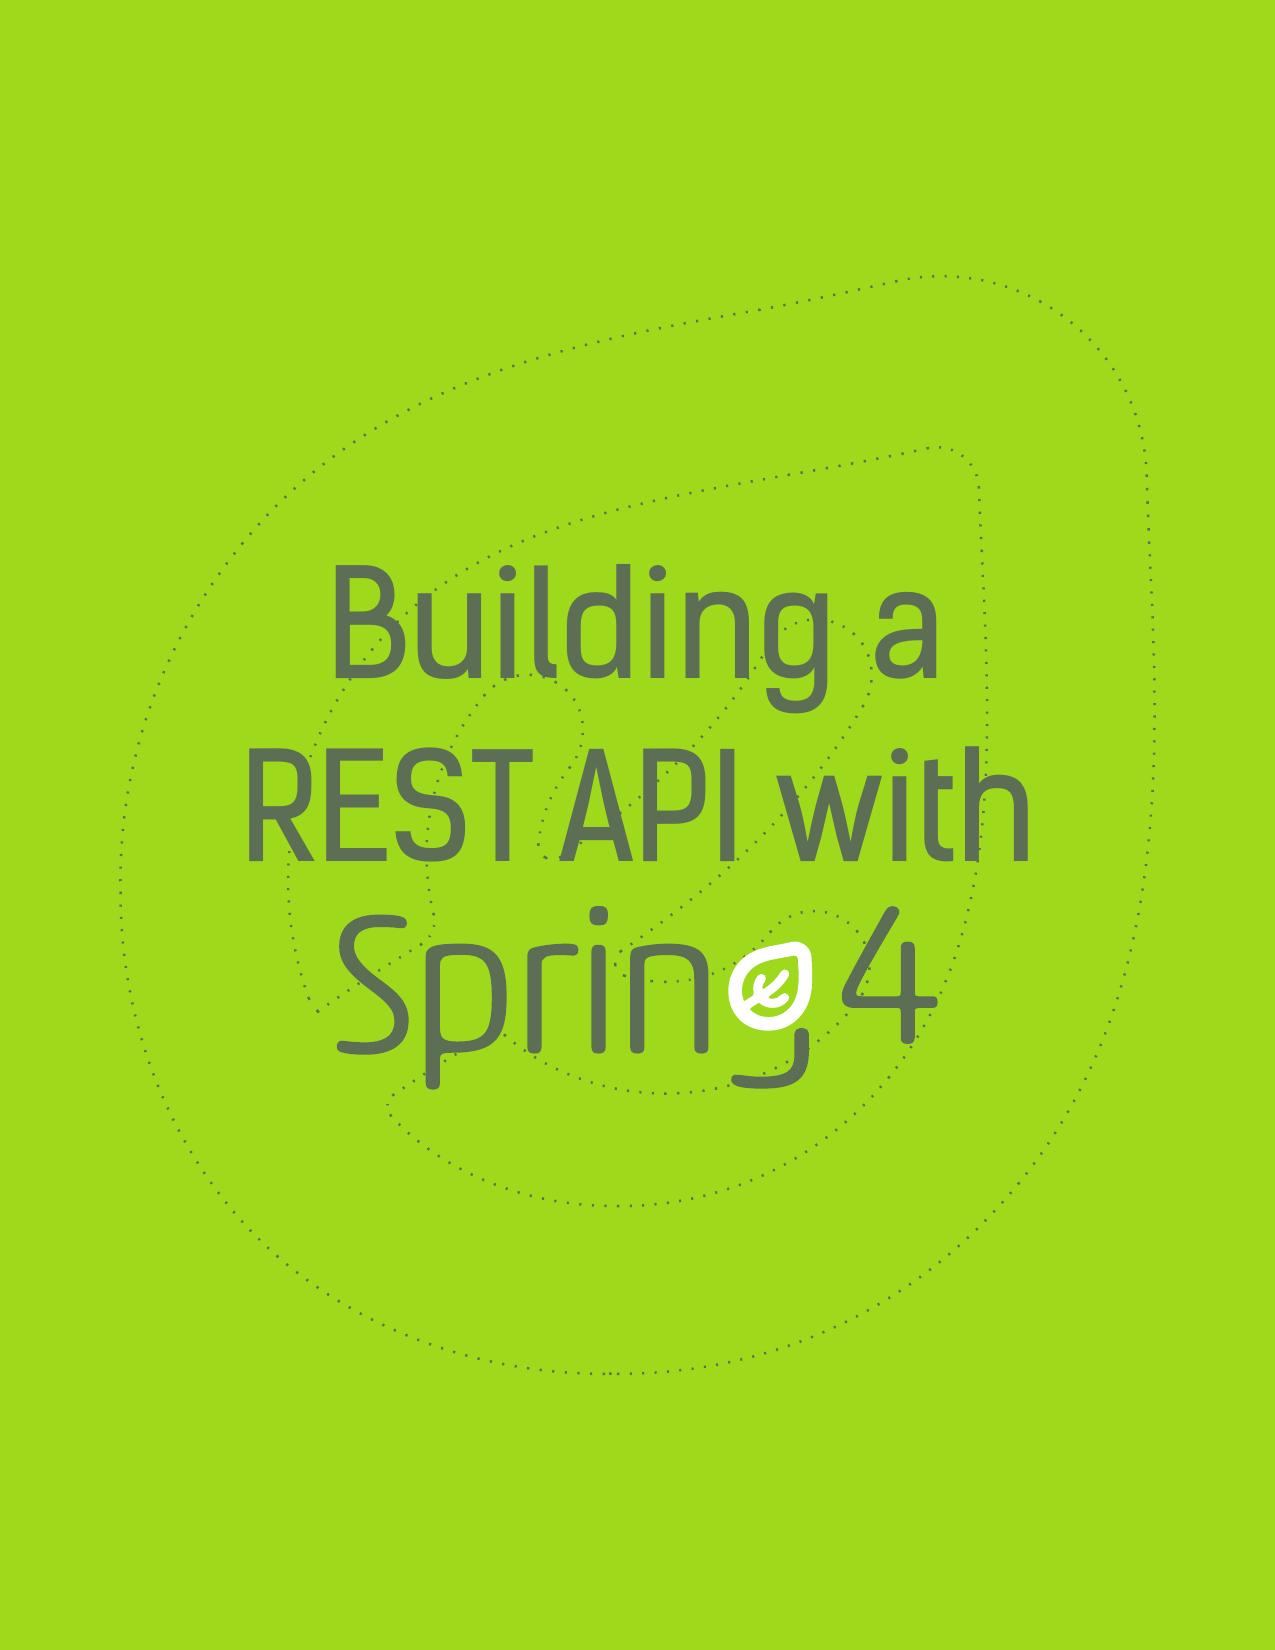 Building a REST API with Spring 4